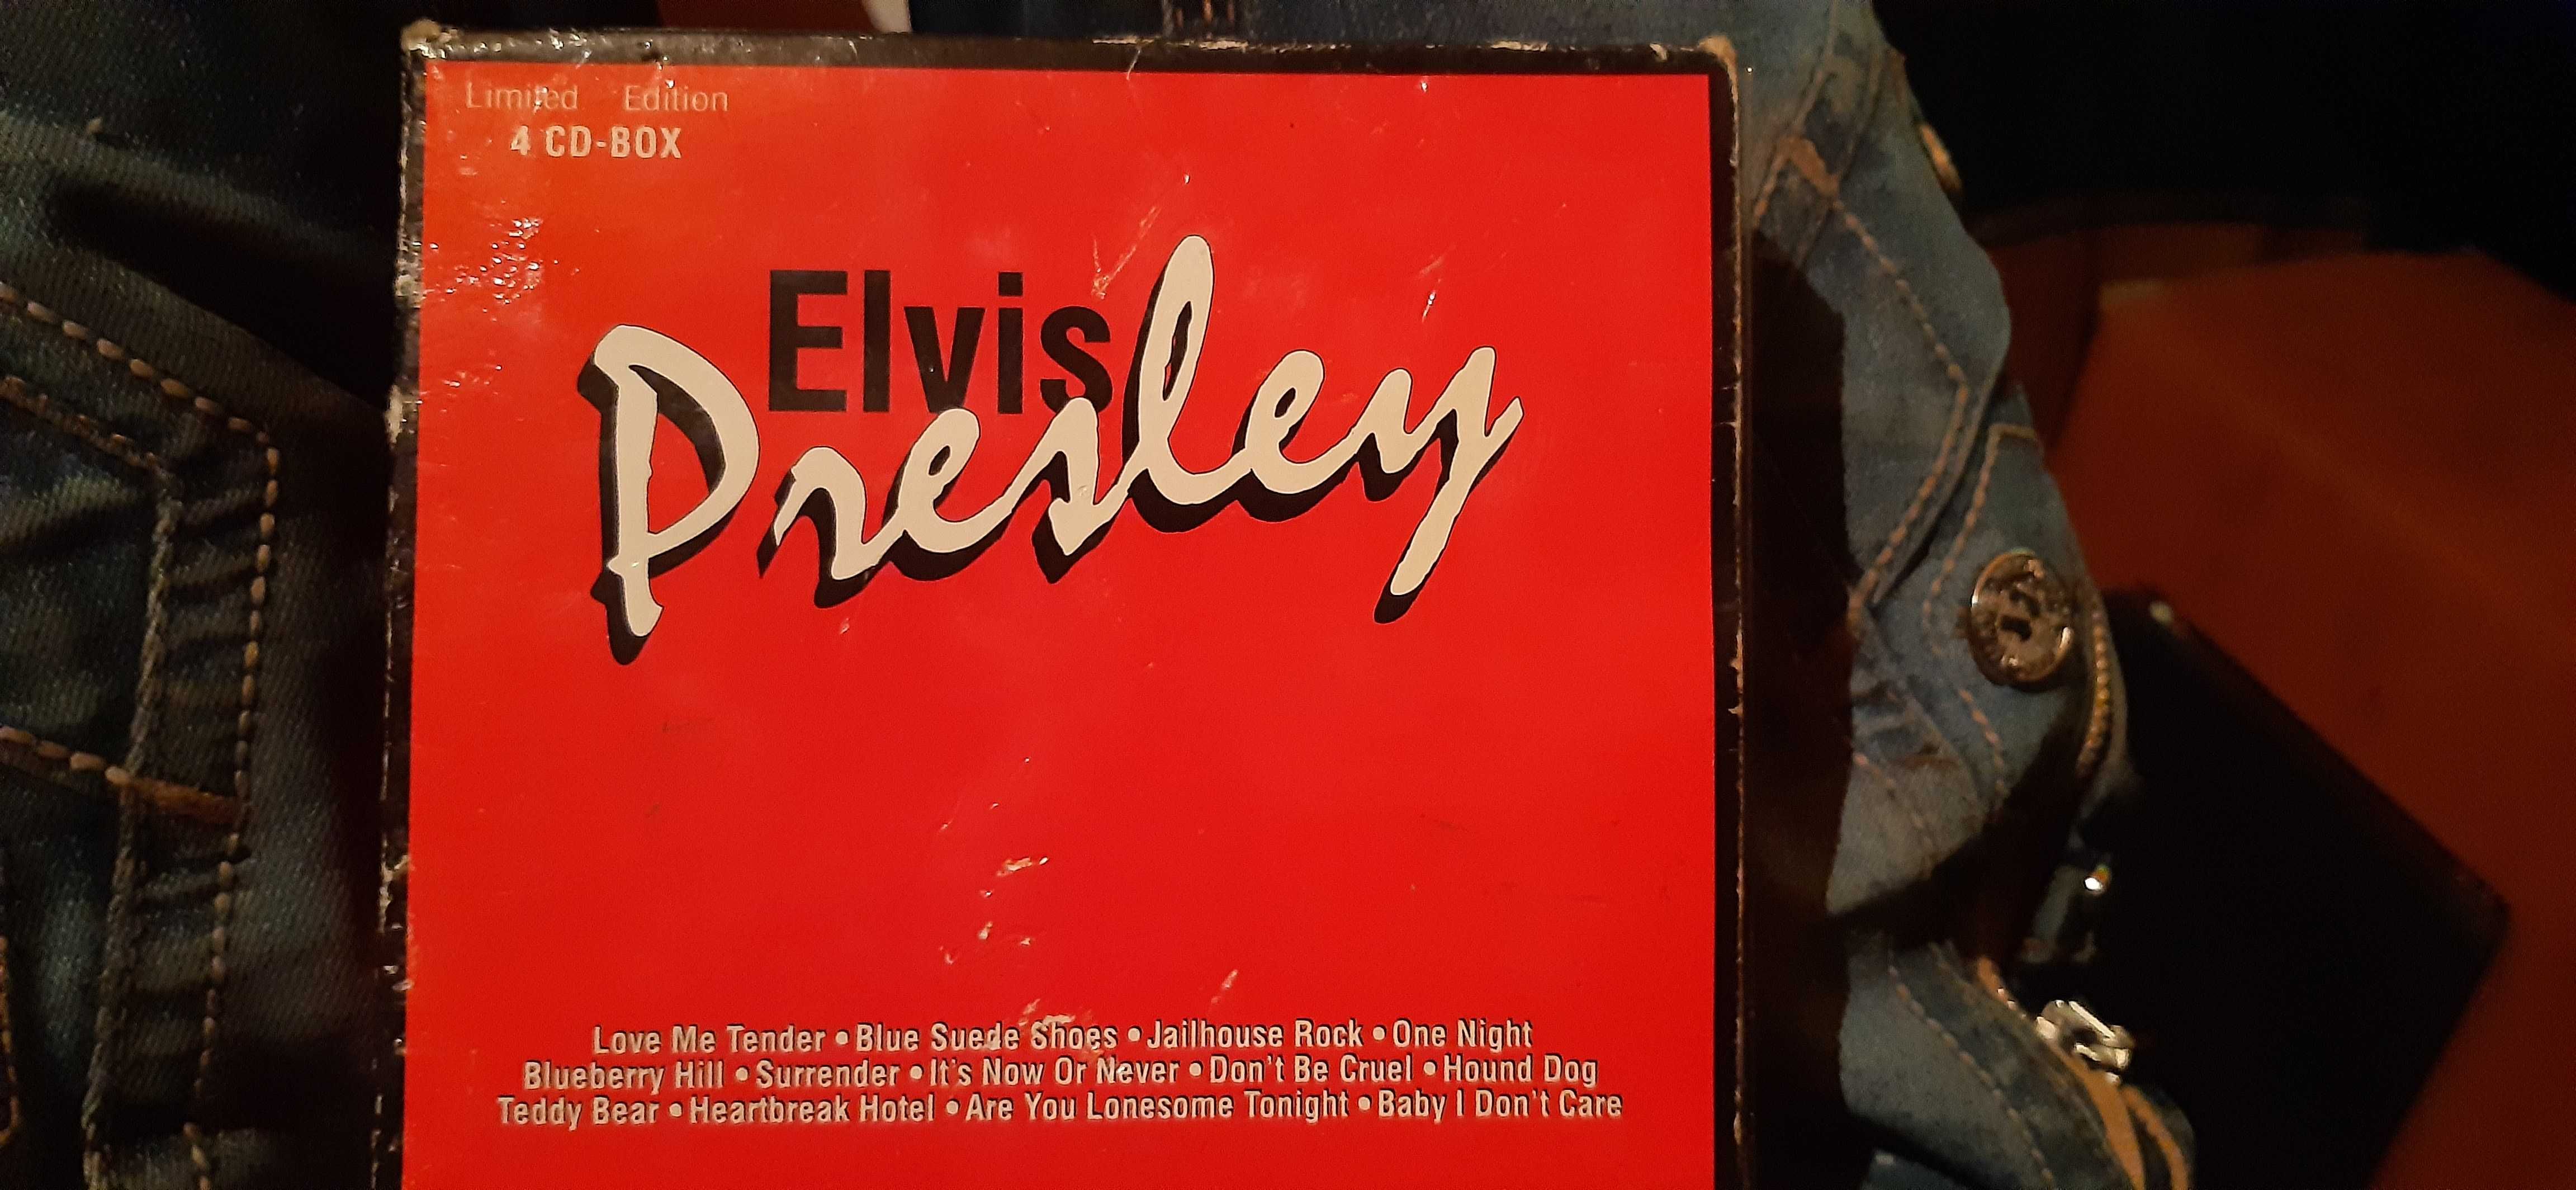 Elvis Presley Компак диски Limited Edition origin